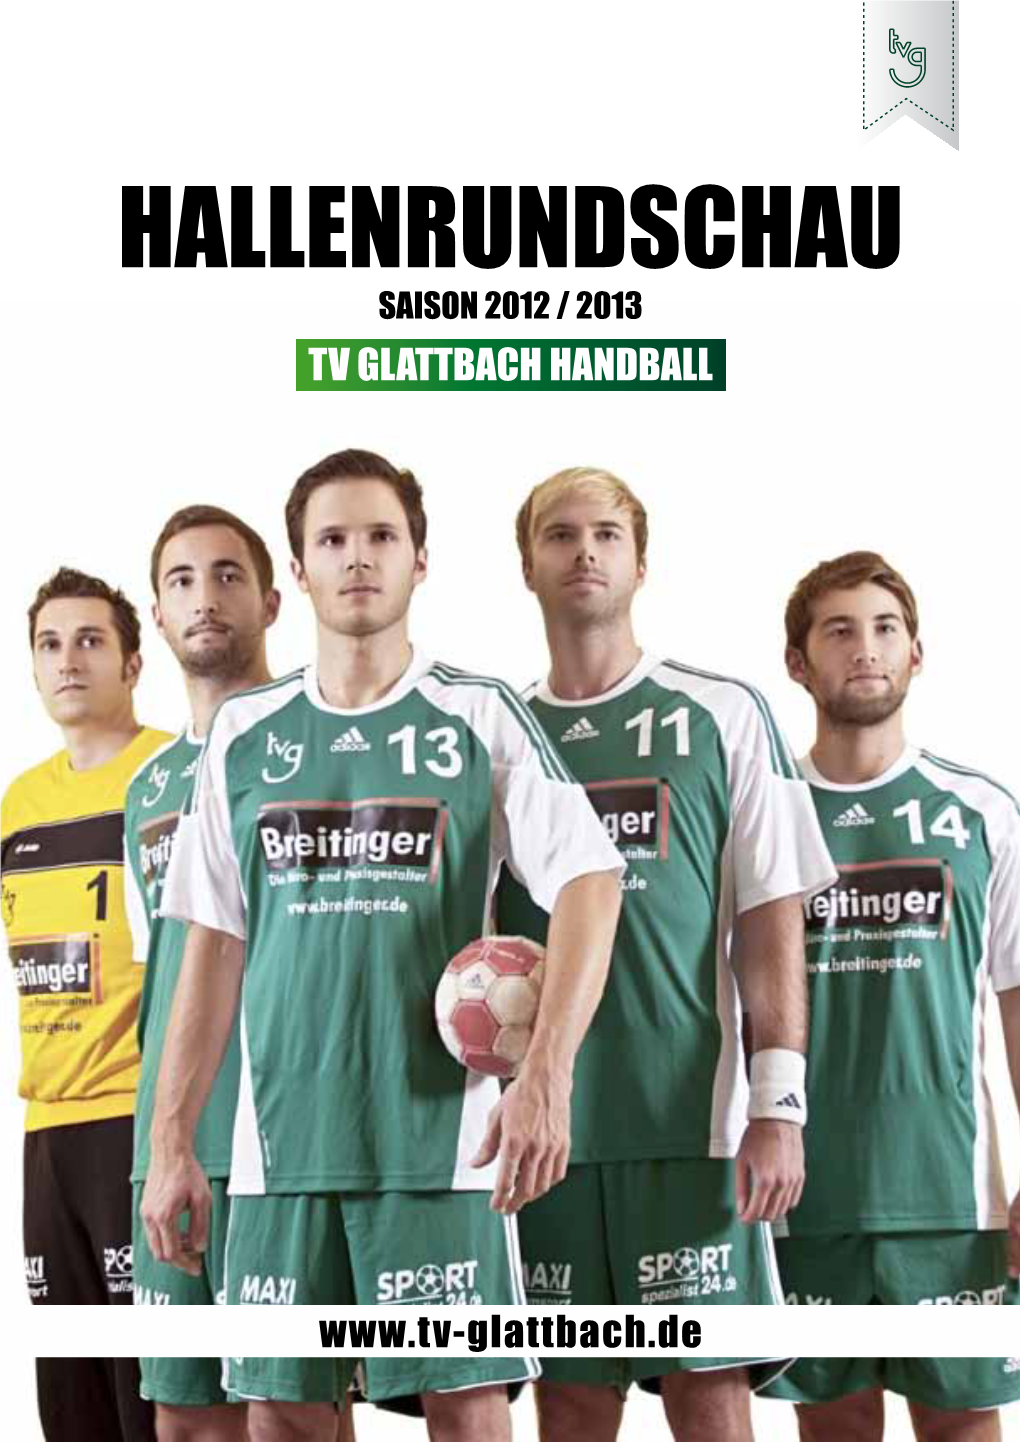 Hallenrundschau Saison 2012 / 2013 Tv Glattbach Handball